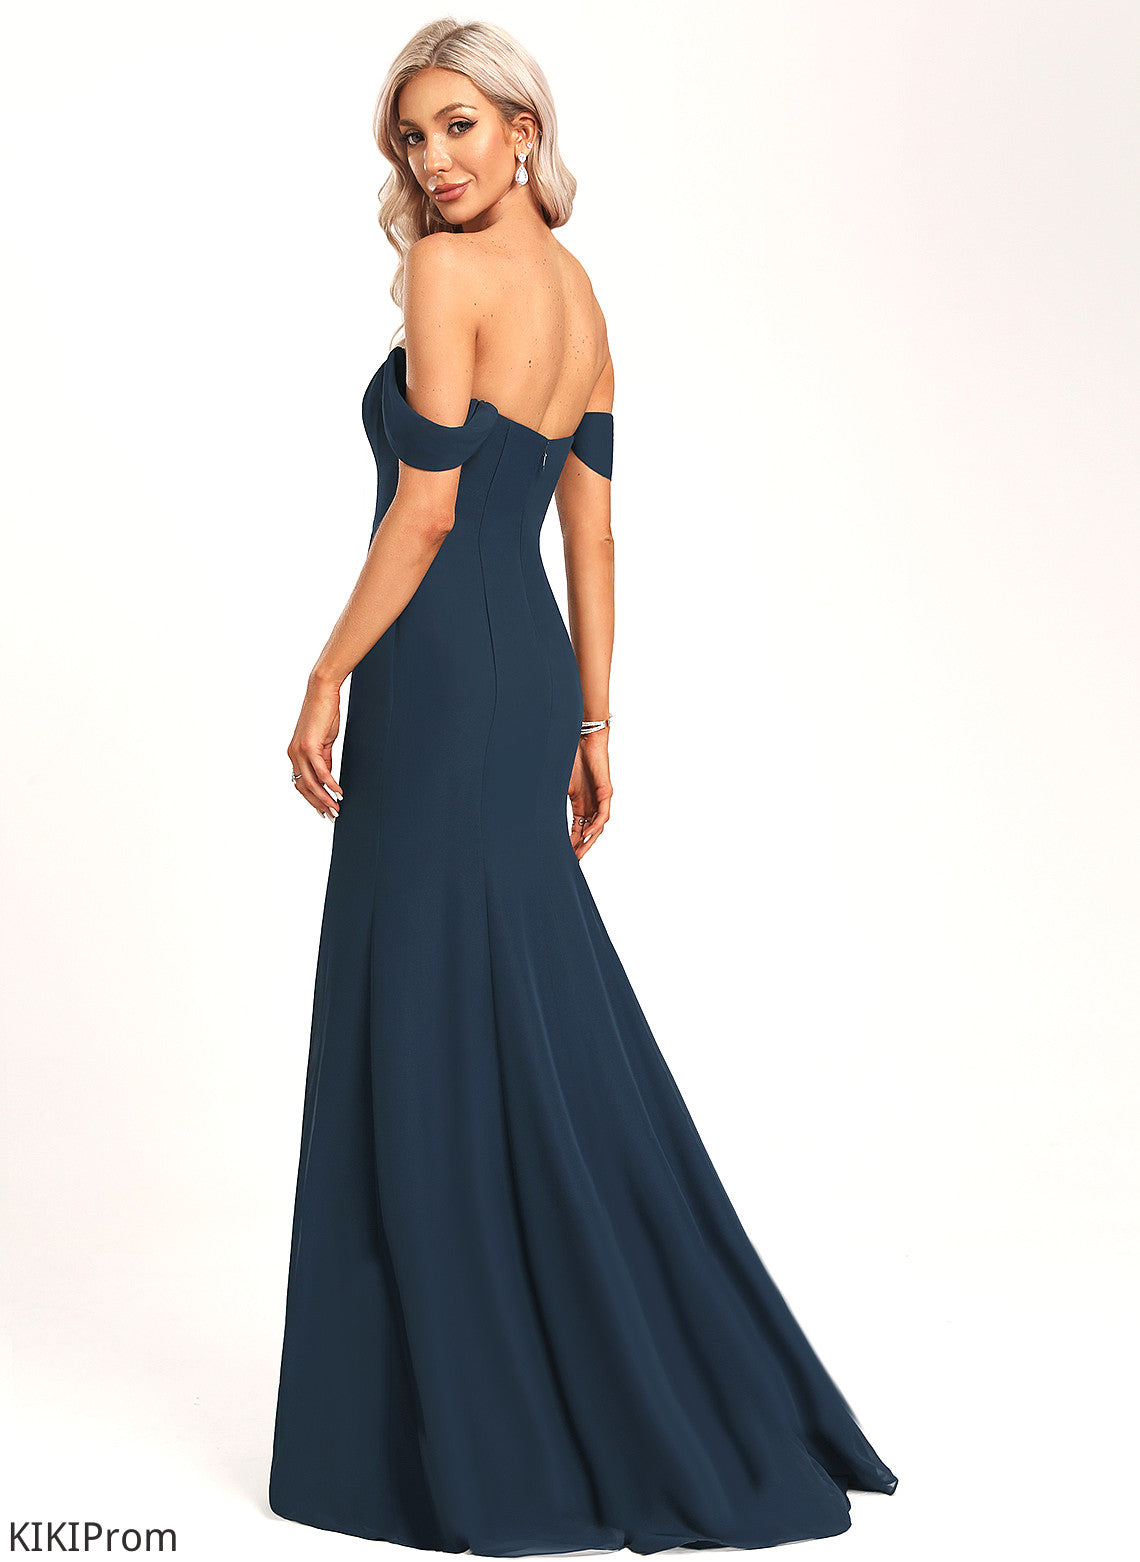 Silhouette Neckline Fabric Off-the-Shoulder Straps&Sleeves Length Trumpet/Mermaid Floor-Length Celia Bridesmaid Dresses